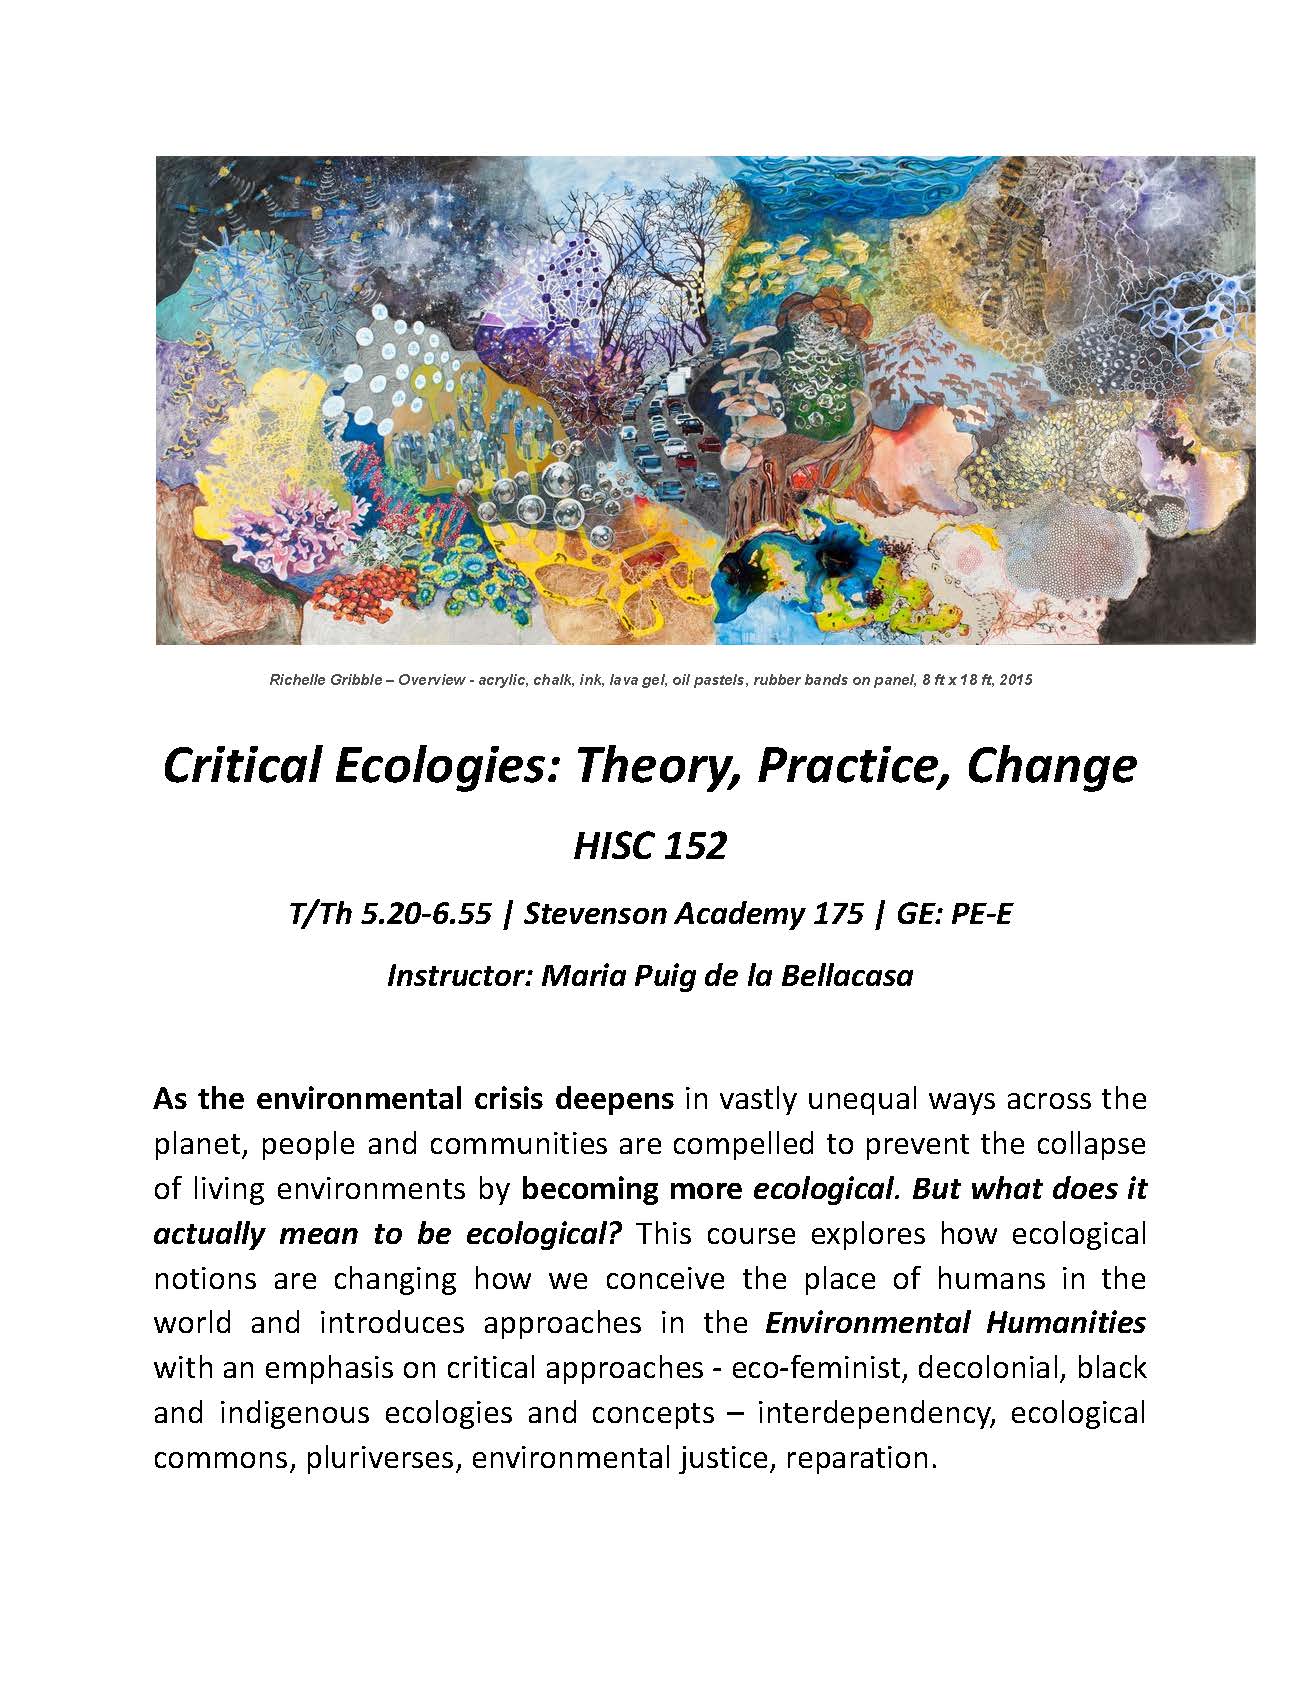 HISC 152: Critical Ecologies: Theory, Practice, Change